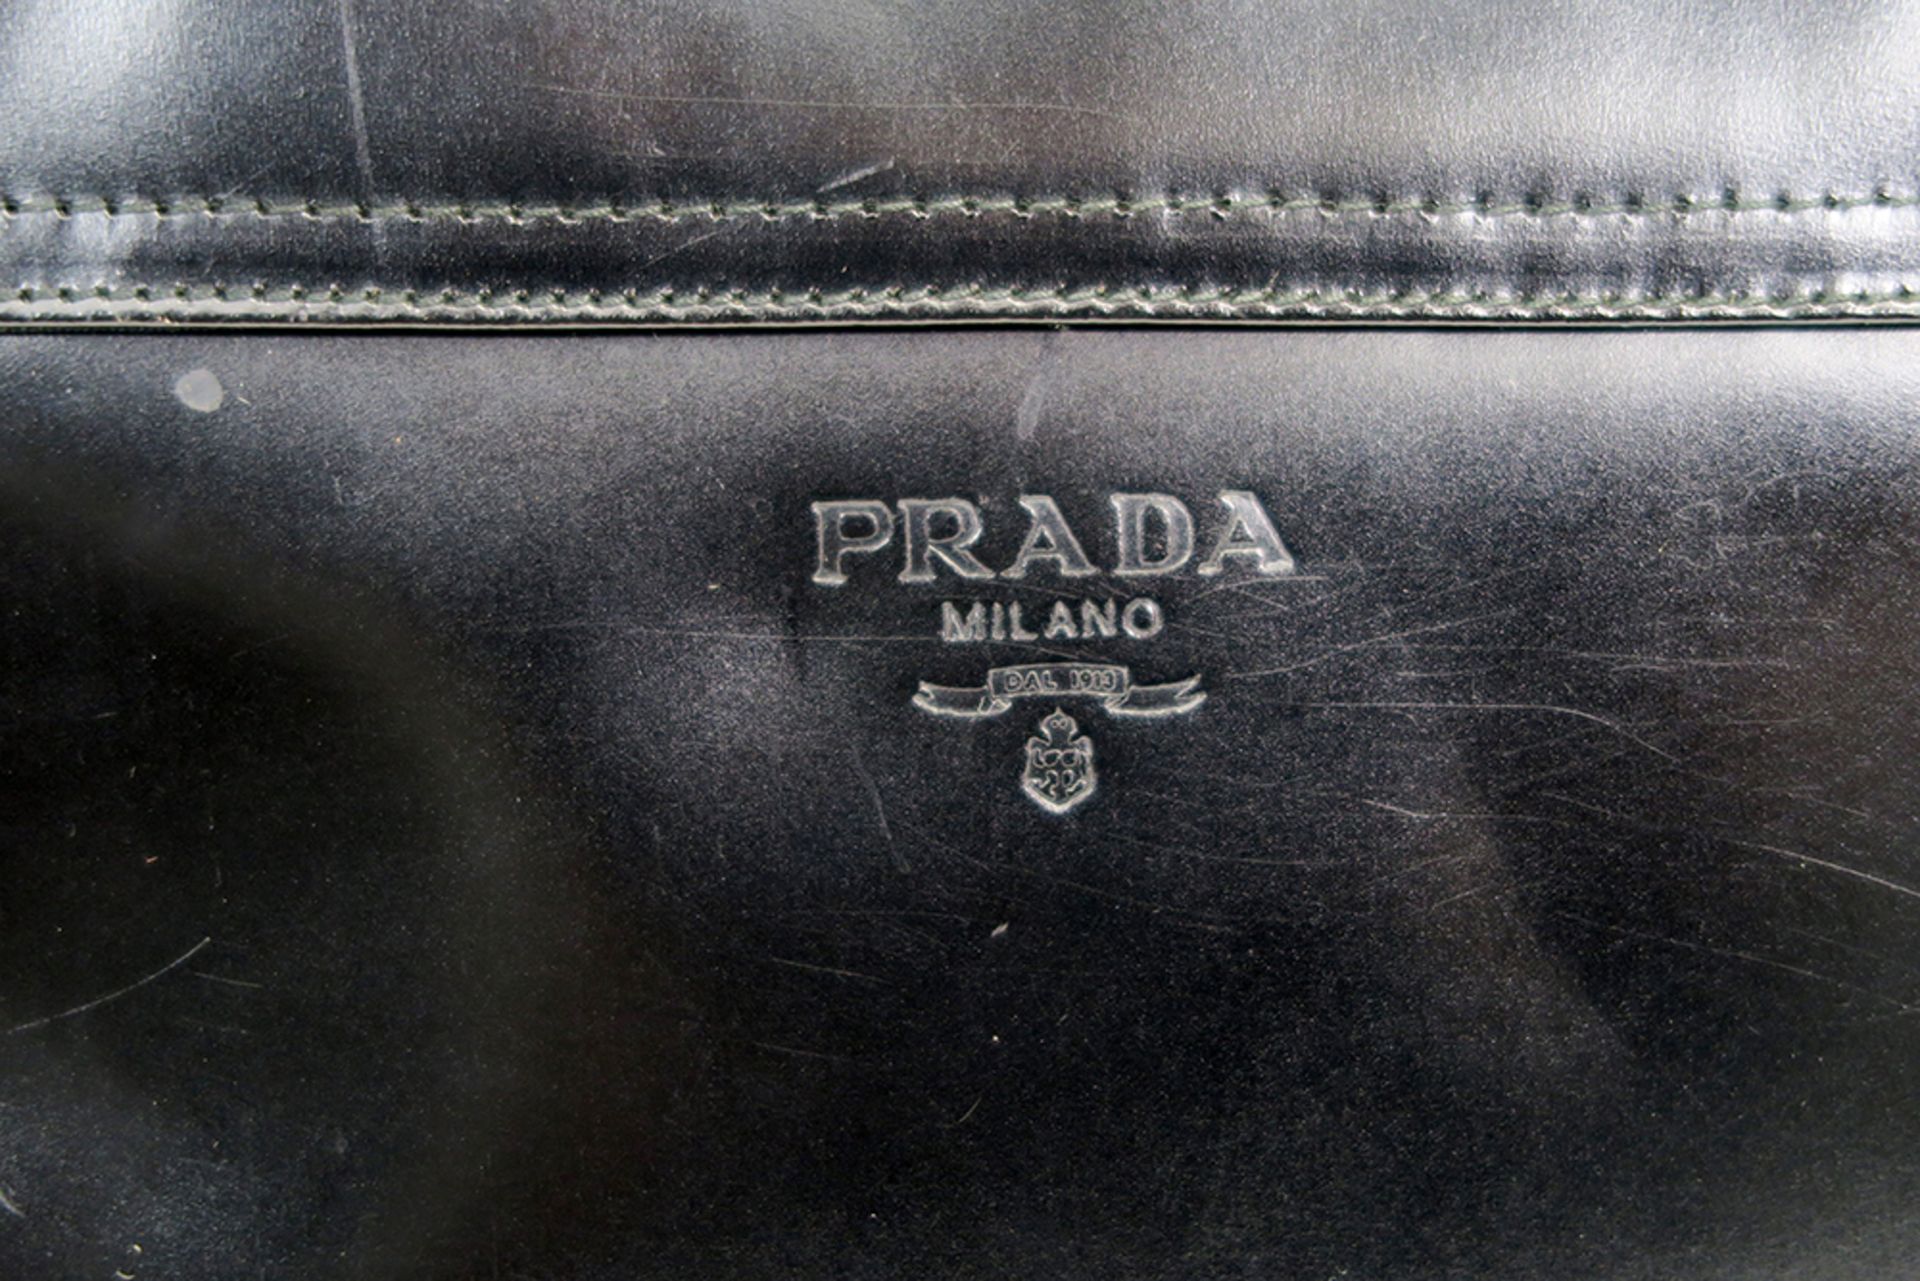 Prada marked handbag in black leather || PRADA handtas in zwart leder gemerkt - Image 4 of 4